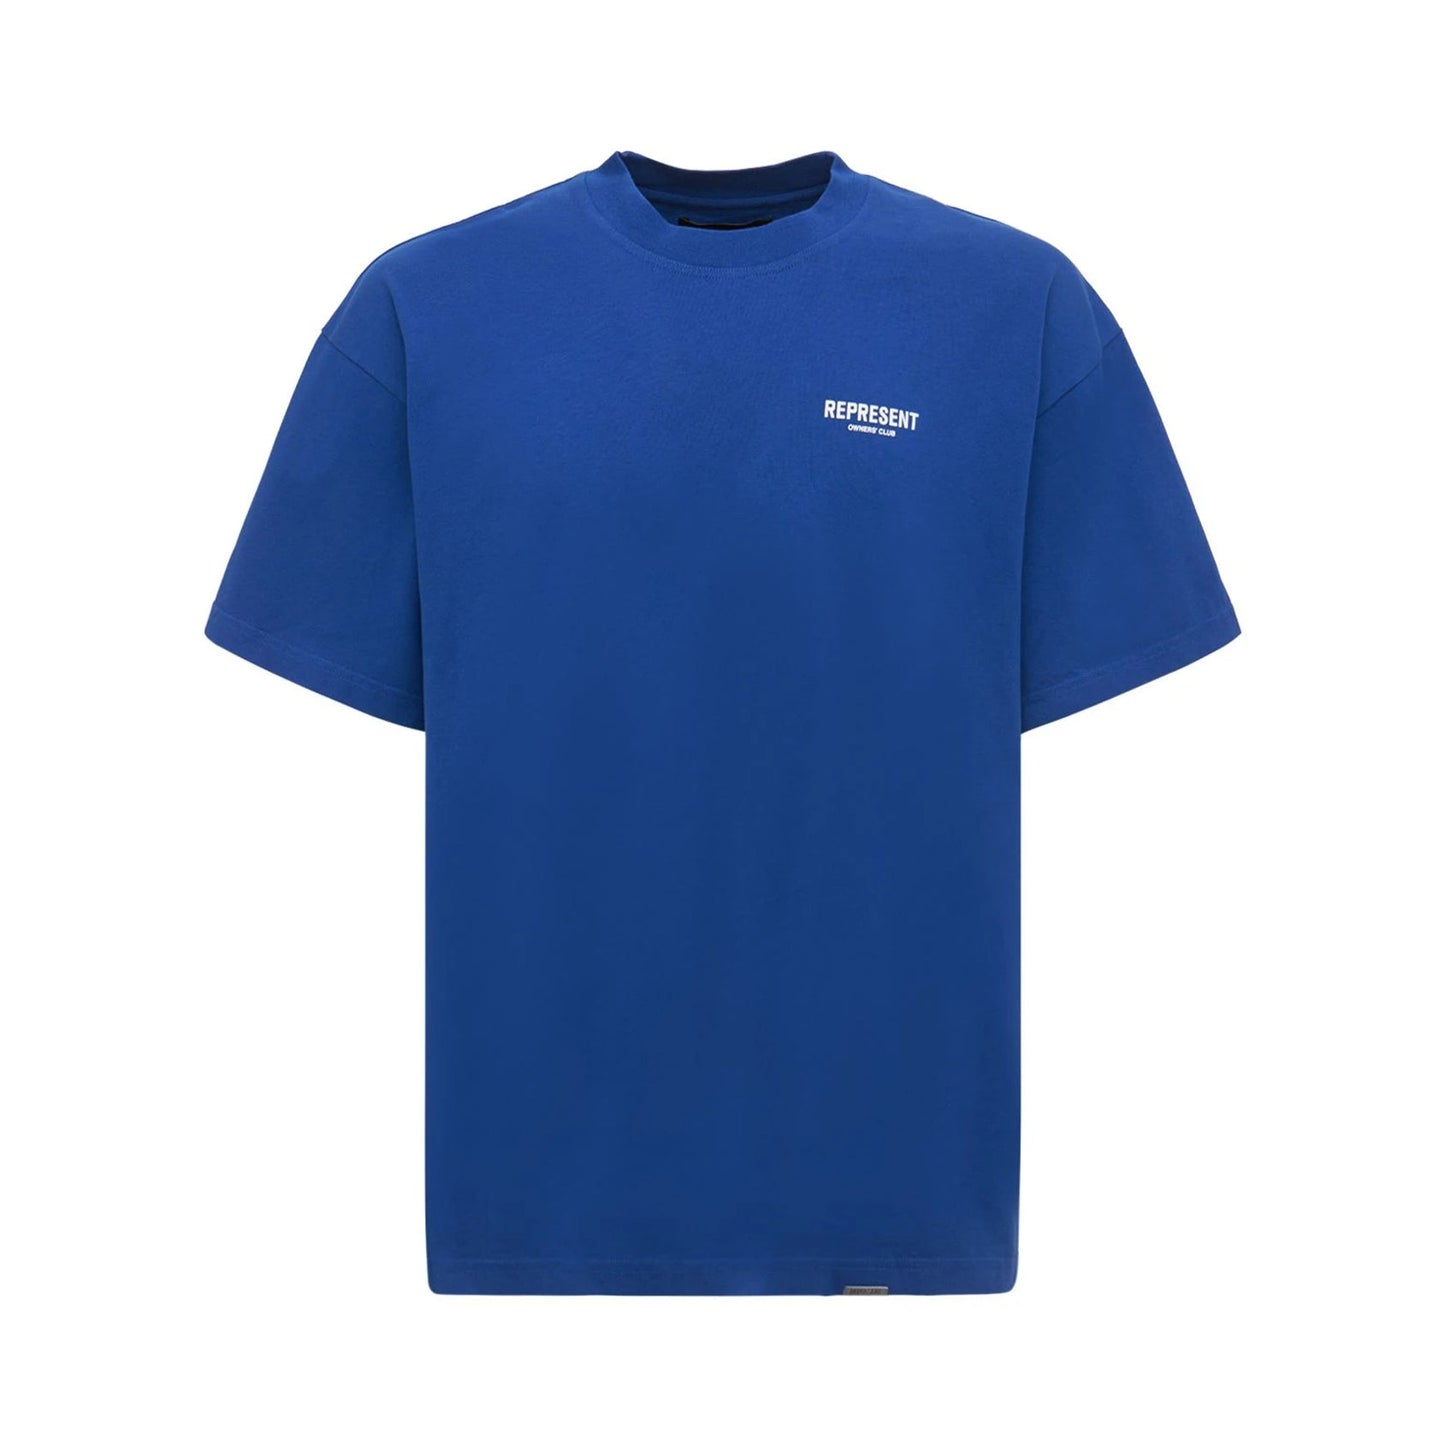 Represent Owners Club T-Shirt - 109 Cobalt - Escape Menswear